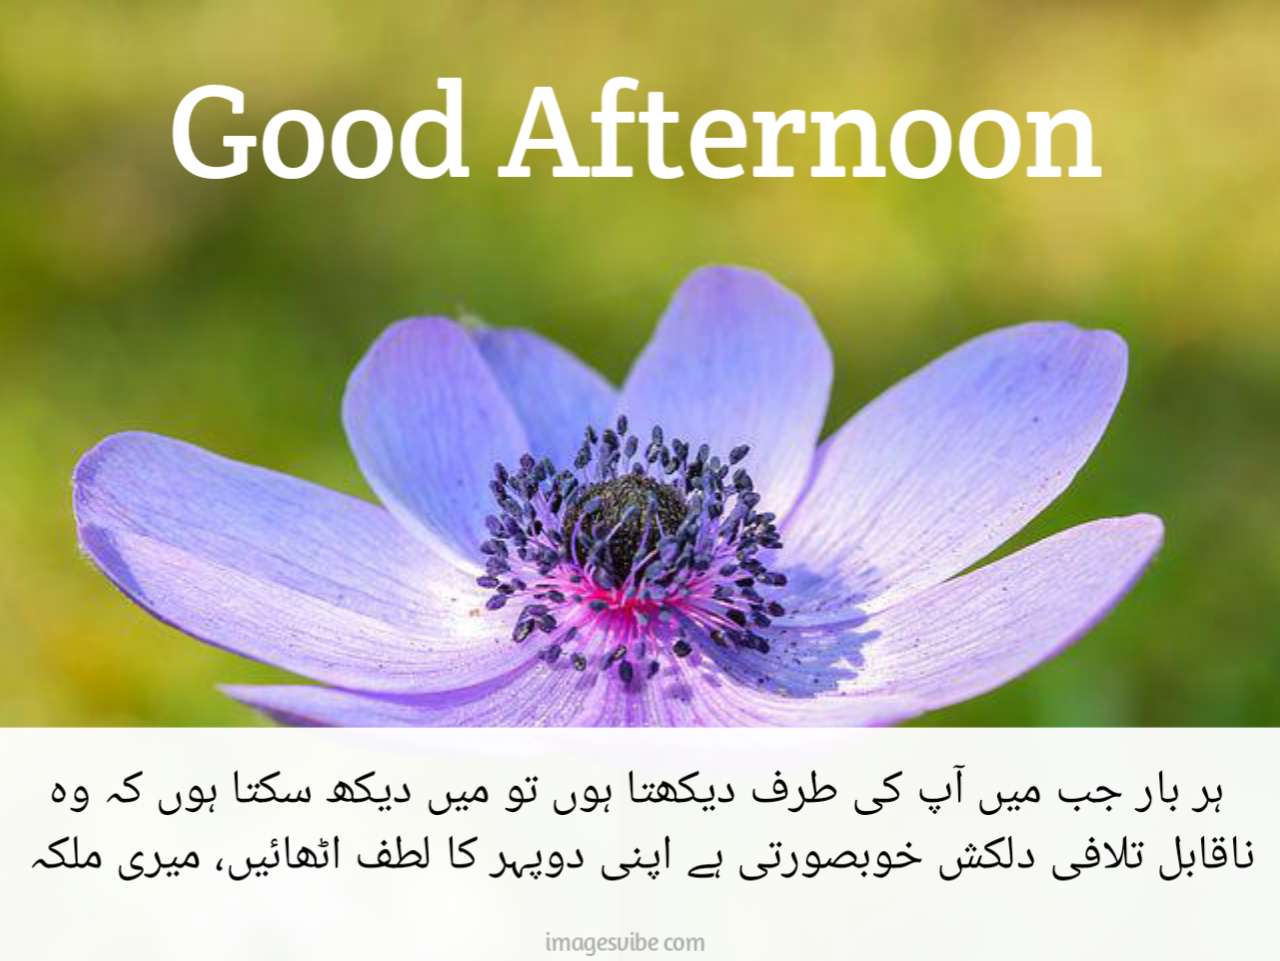 Good Afternoon Urdu Images